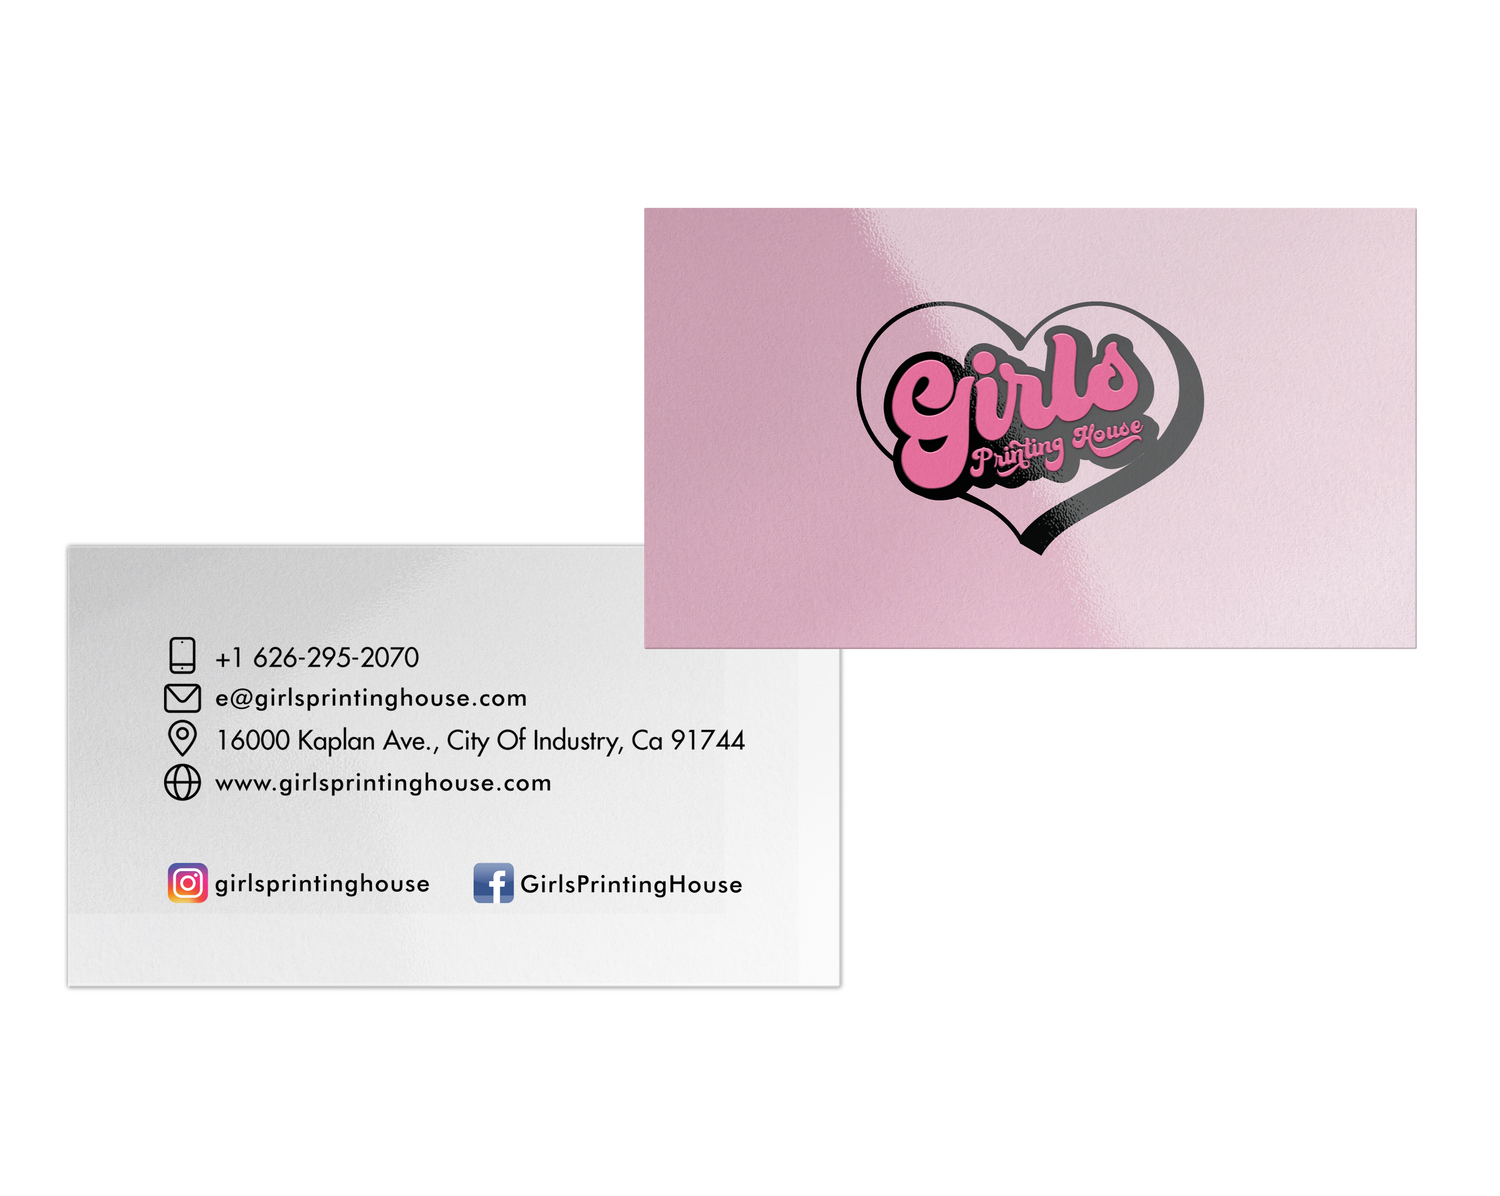 Girls Printing House – GirlsPrintingHouse